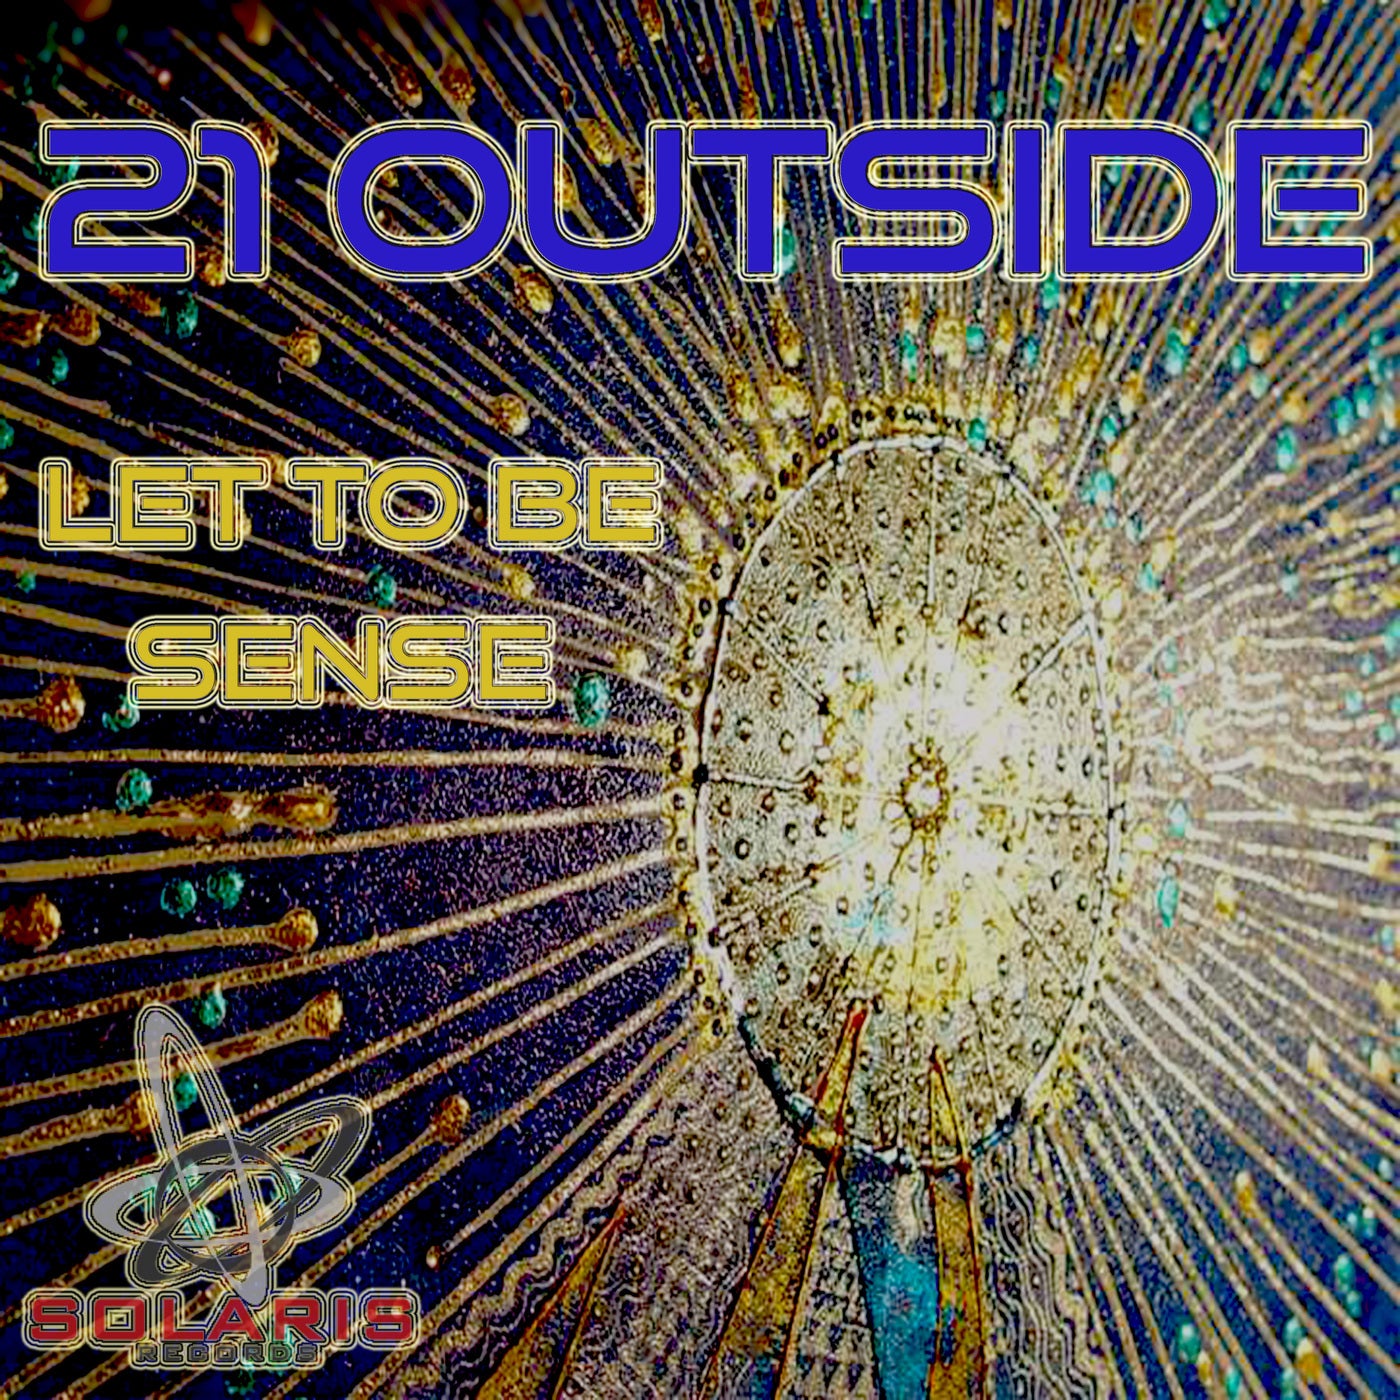 21 Outside - Let to Be - Sense [SOL076]